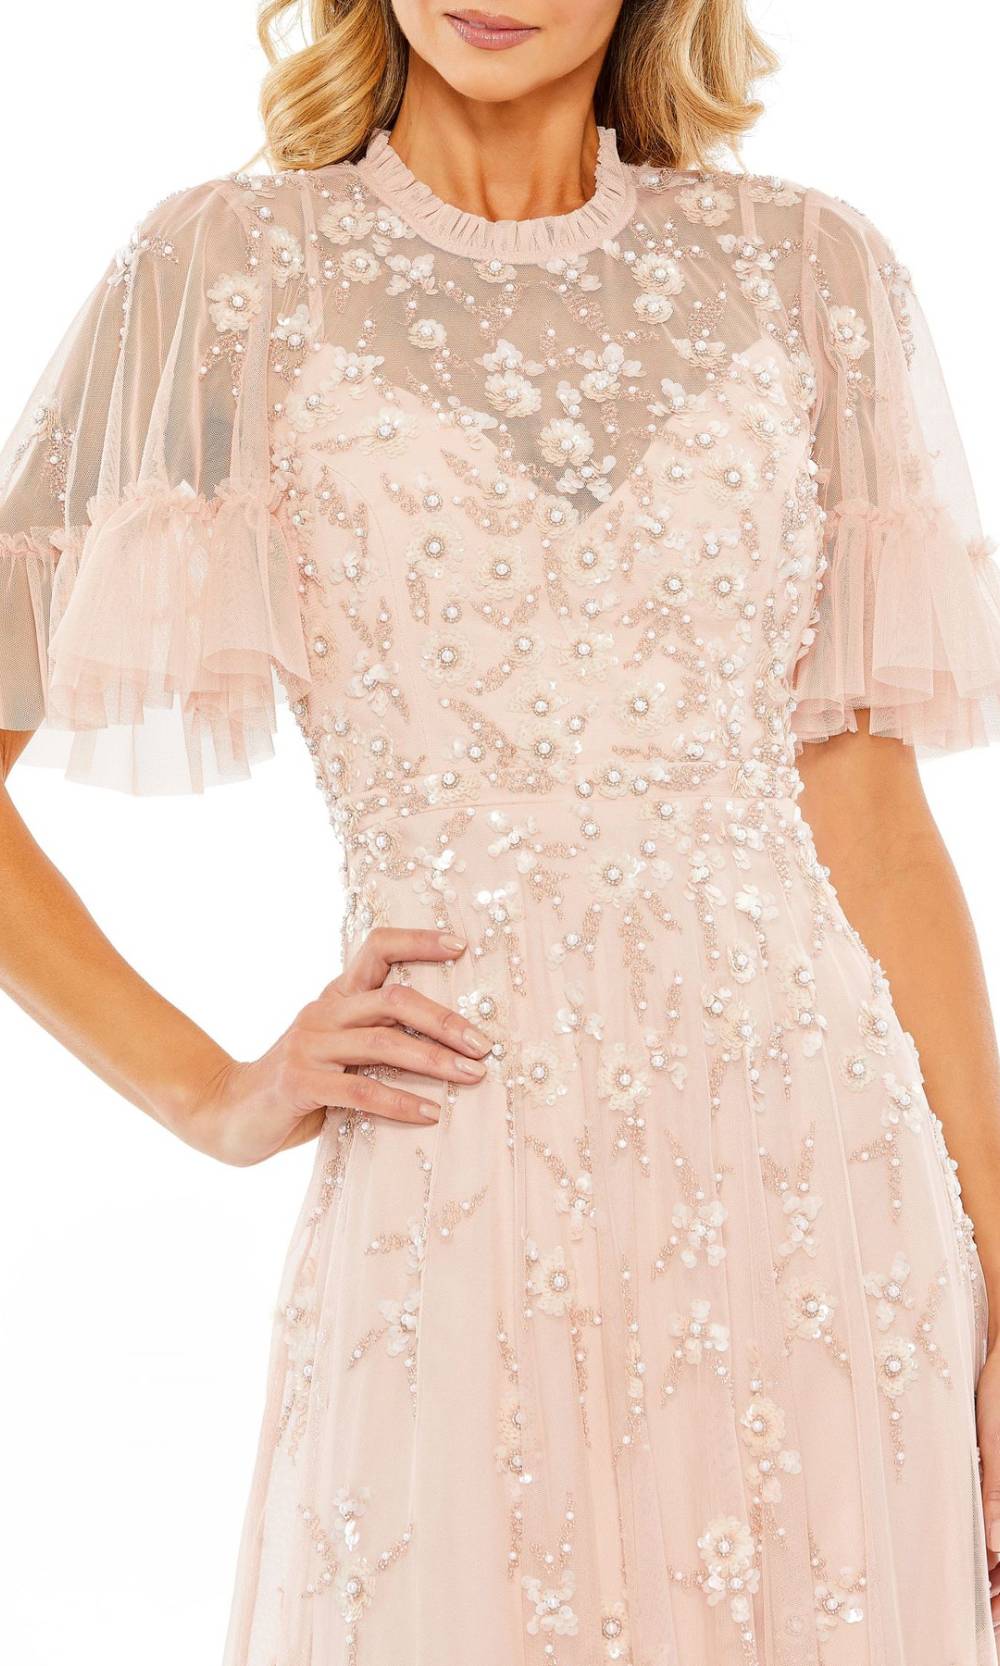 Mac Duggal - 9199 Ruffled Jewel Neck Embellished Dress In Blush